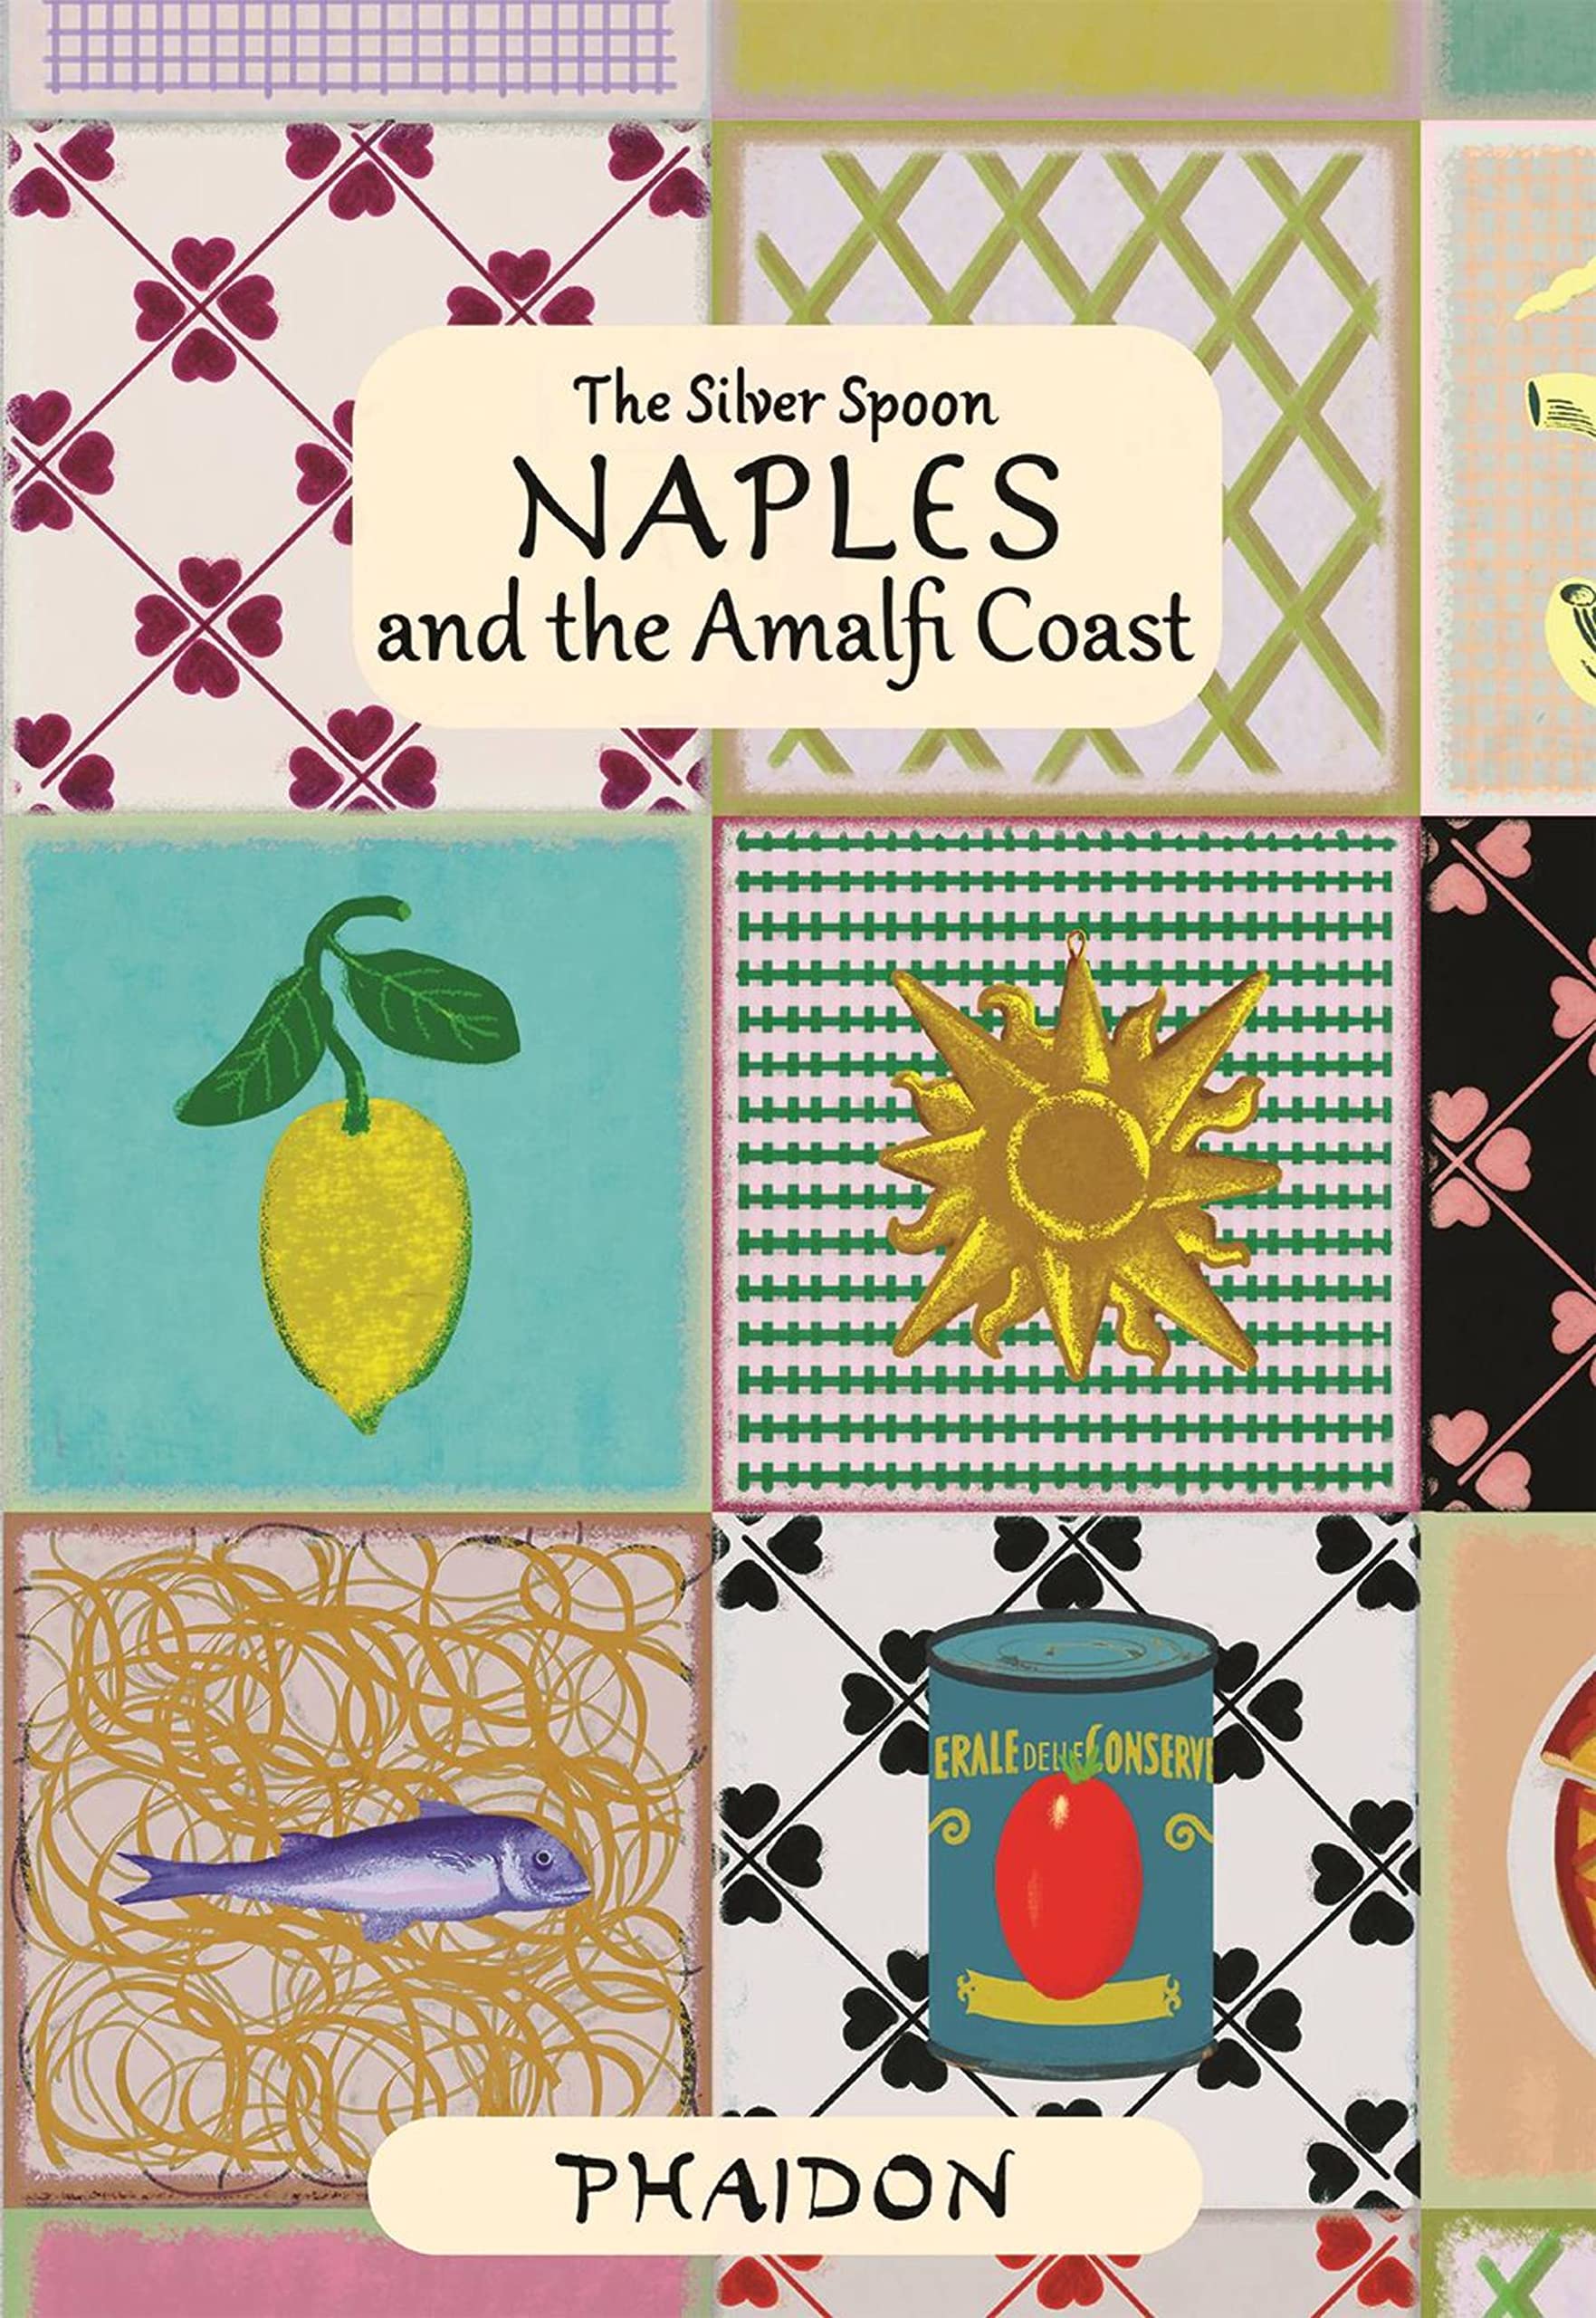 Naples and the Amalfi Coast from Silver Spoon Author Phaidon LIB-076